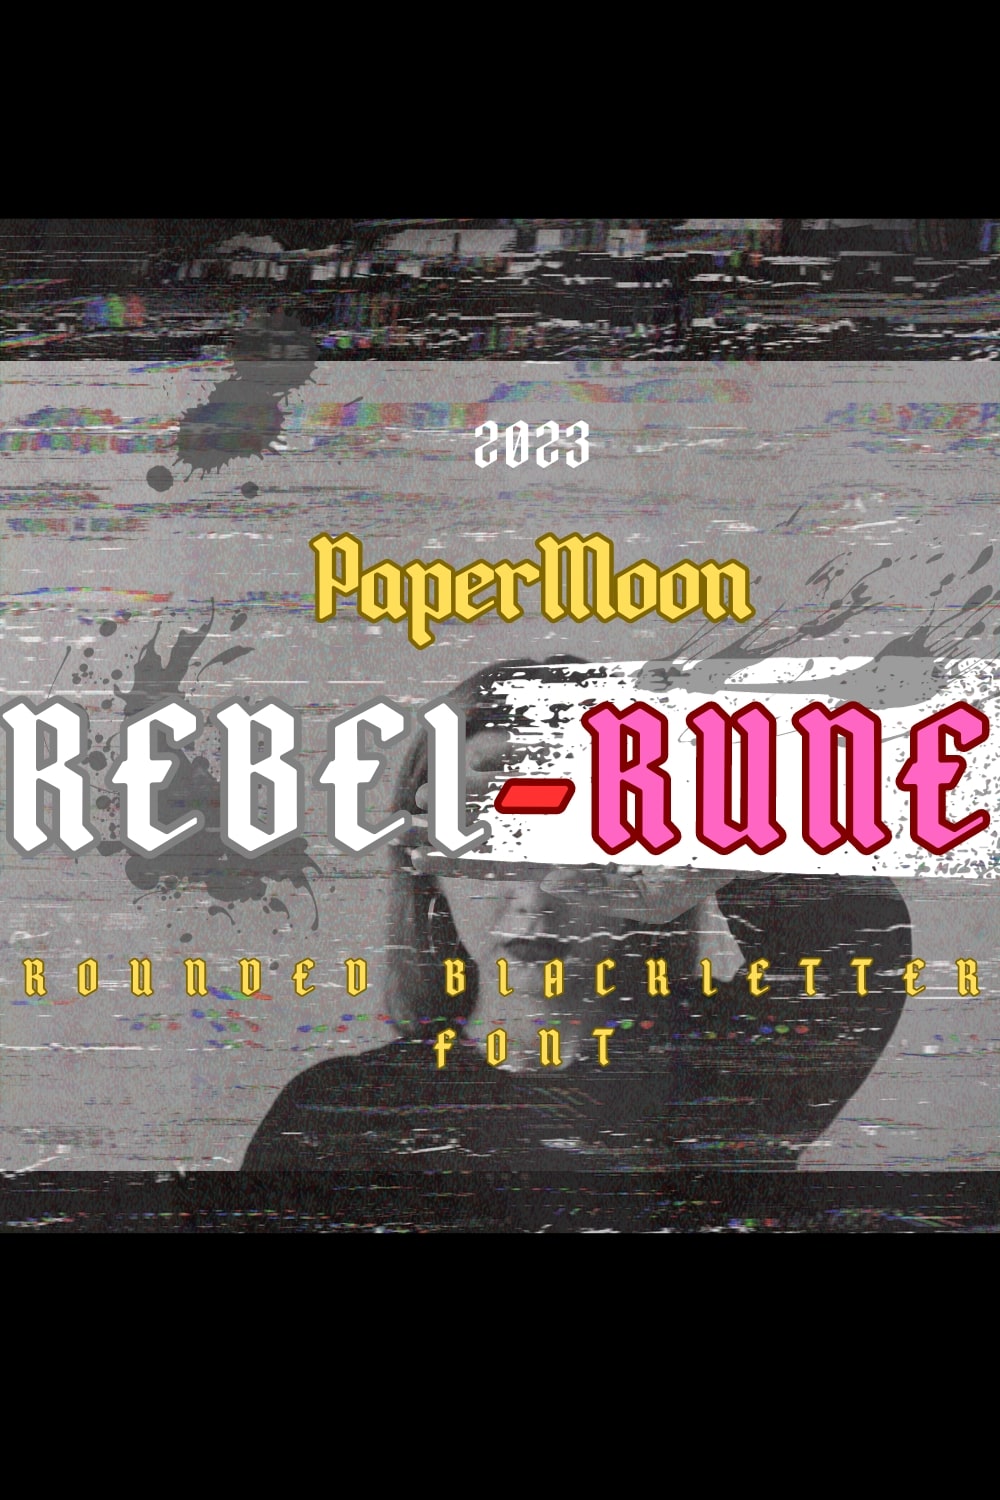 RebelRune - Rounded Blackletter Font pinterest preview image.